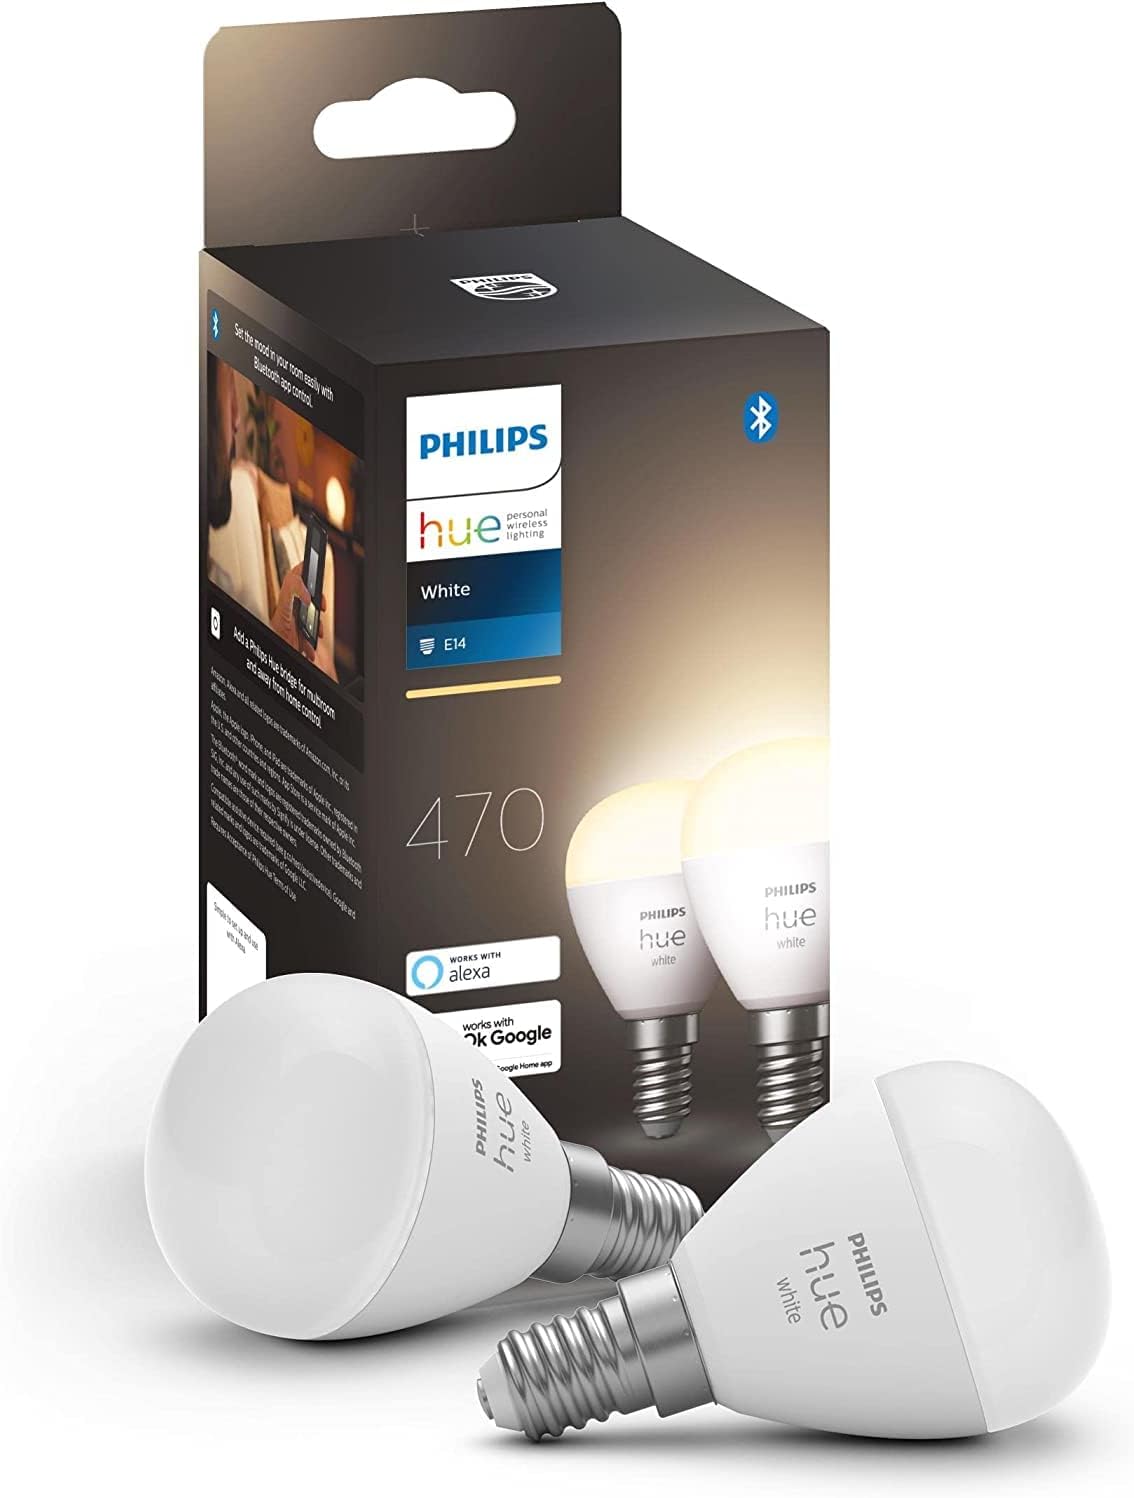 Philips Hue White E14 Luster Doppelpack 2x470lm, dimmbar, warmweißes Licht, steuerbar via App, kompatibel mit Amazon Alexa (Echo, Echo Dot)